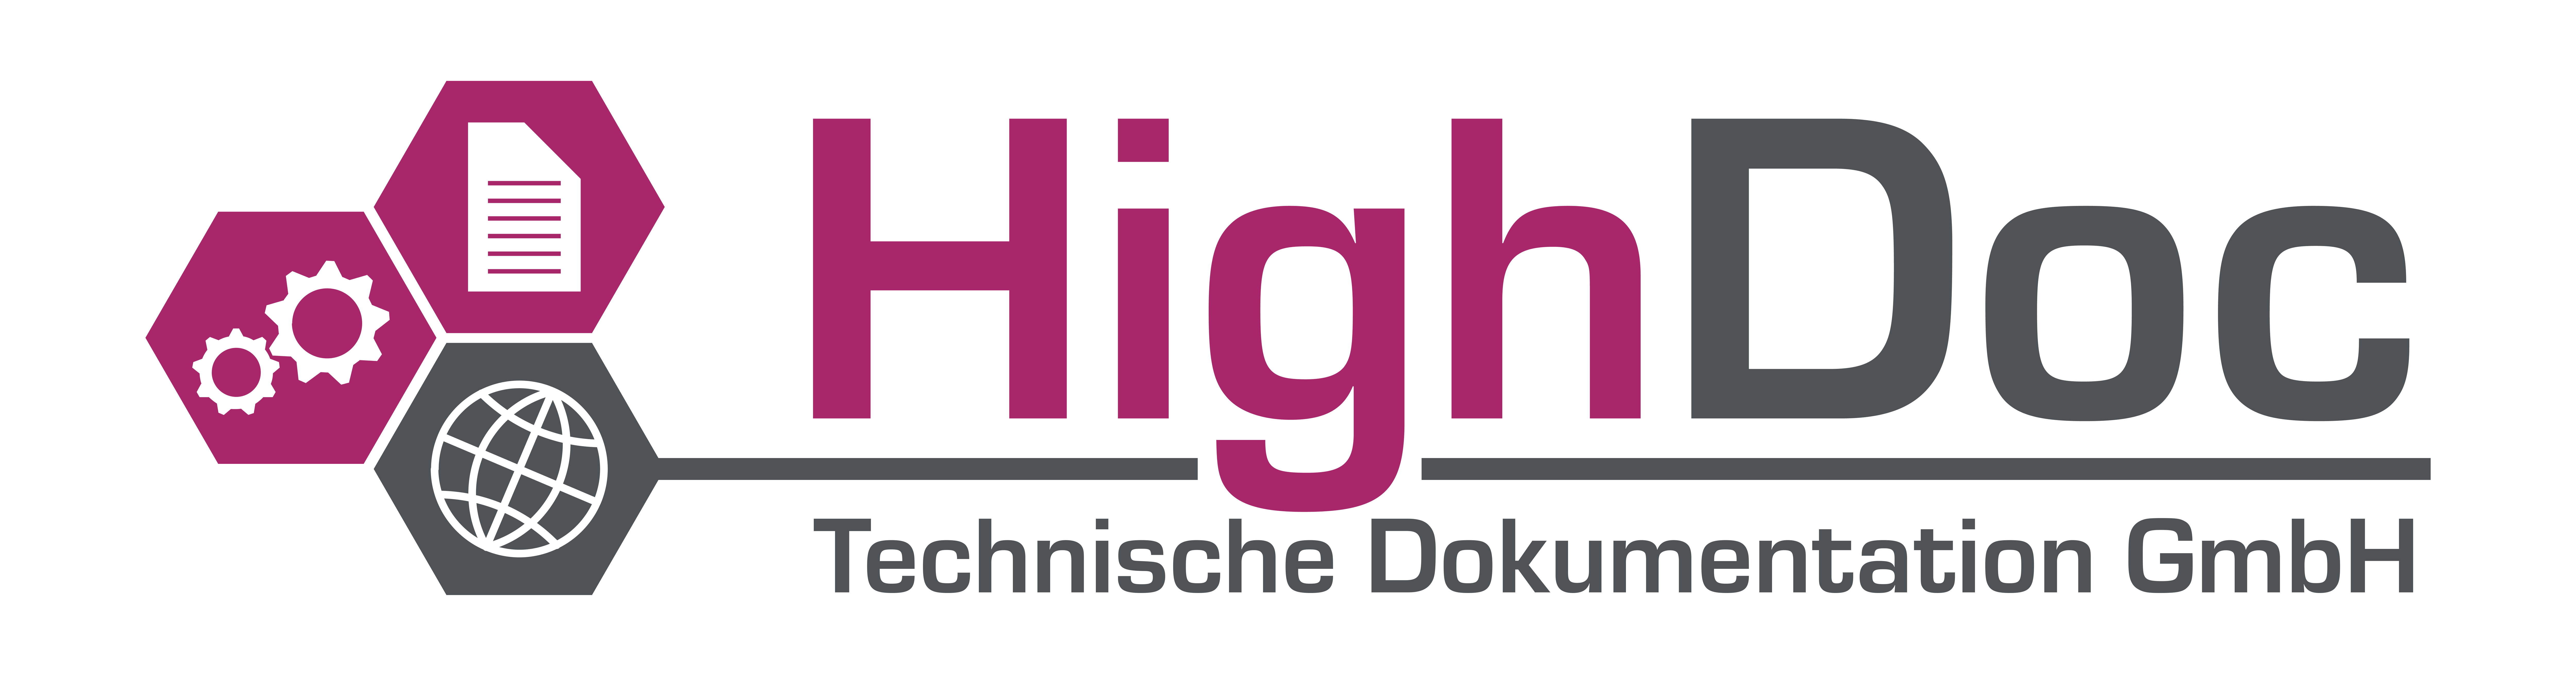 Logo HighDoc Technische Dokumentation GmbH